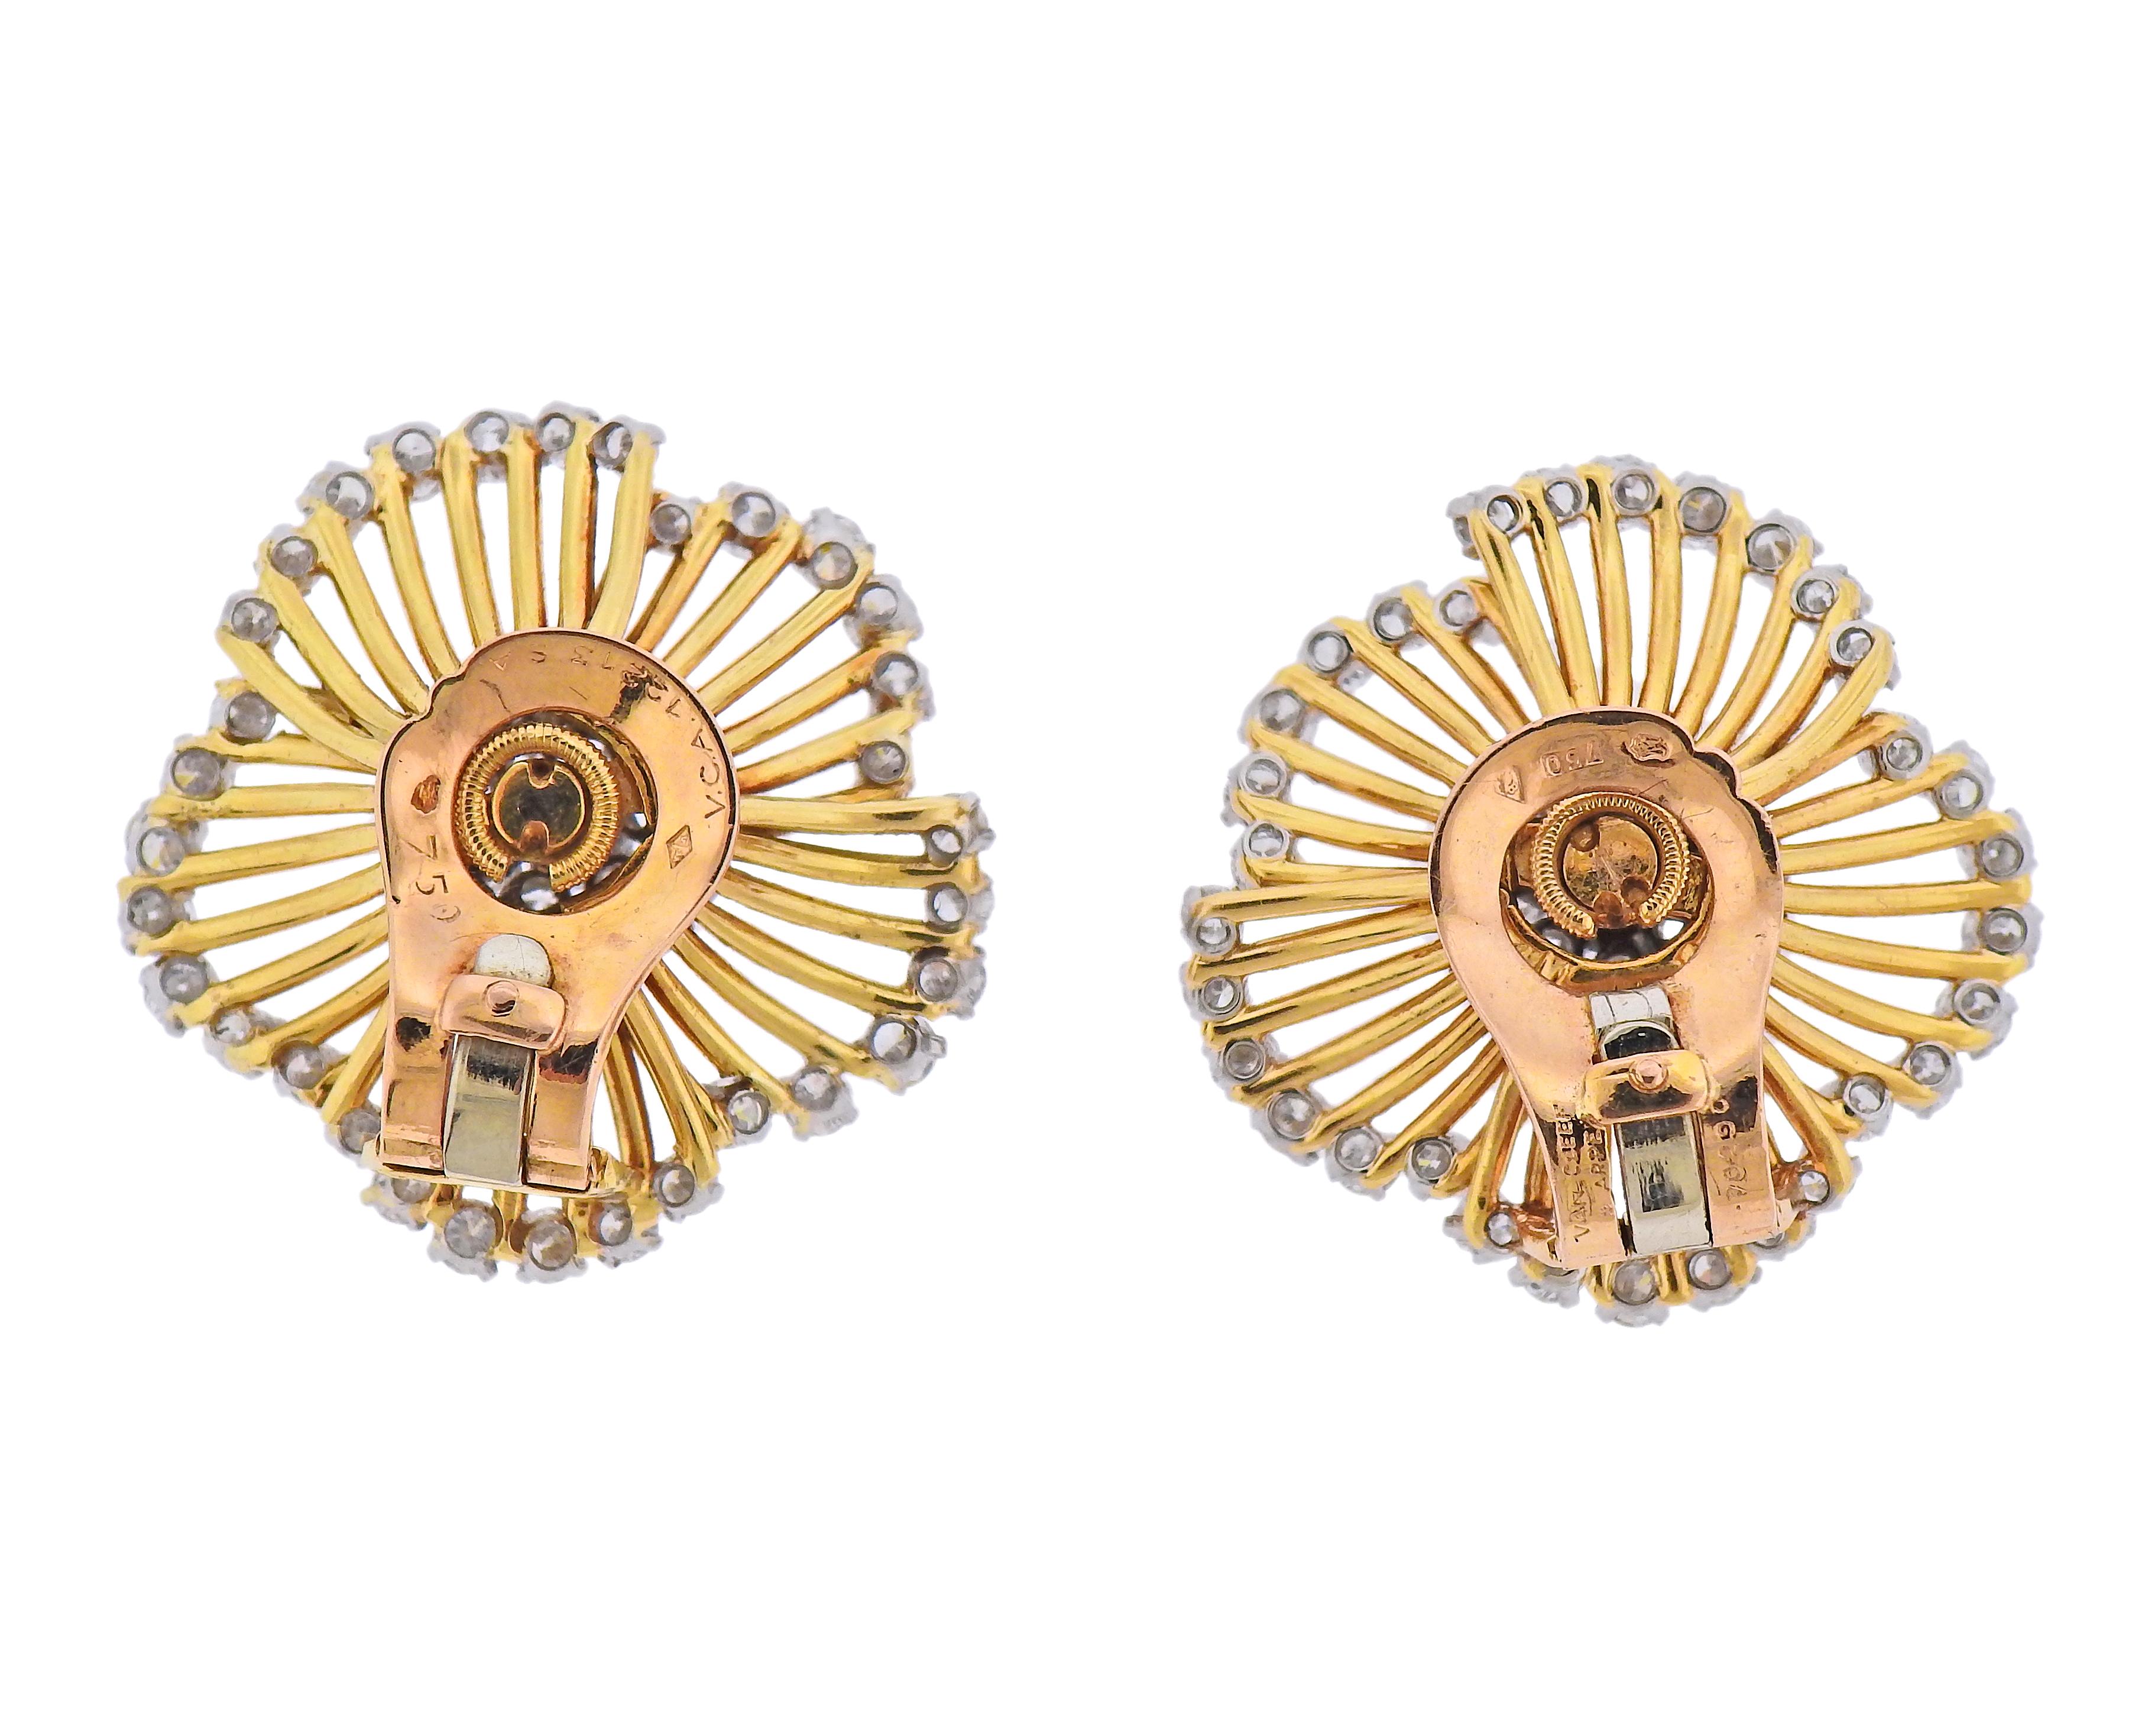 Pair of 18k gold flower earrings by Van Cleef & Arpels, with approx. 4.00cts in diamonds. Earrings are 30m x 30mm. Marked: 750, Van Cleef & Arpels, 70290. Weight - 23.2 grams. 